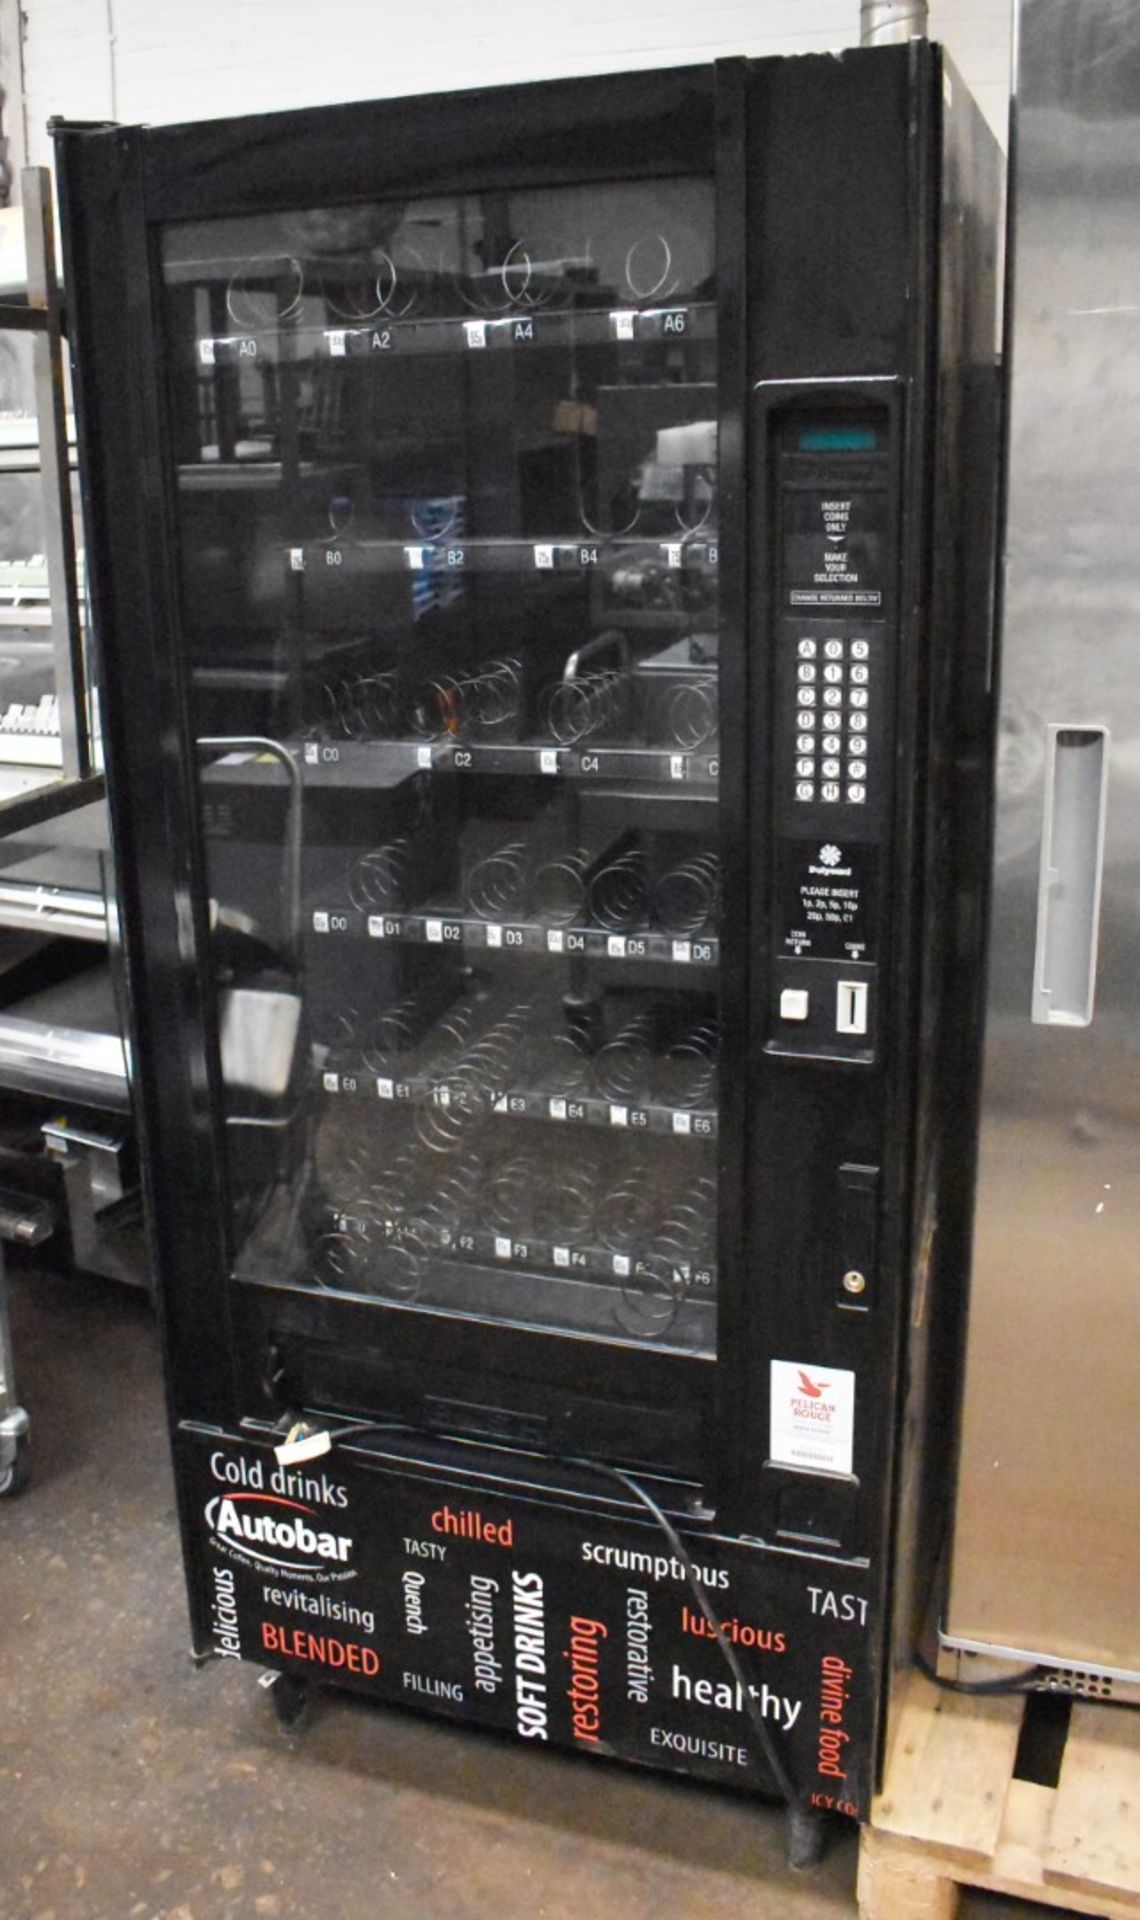 1 x Polyvend 453 Snack Food Vending Machine - H182 x W65 x D72 cms - Ref: GCA153 WH5 - CL011 -